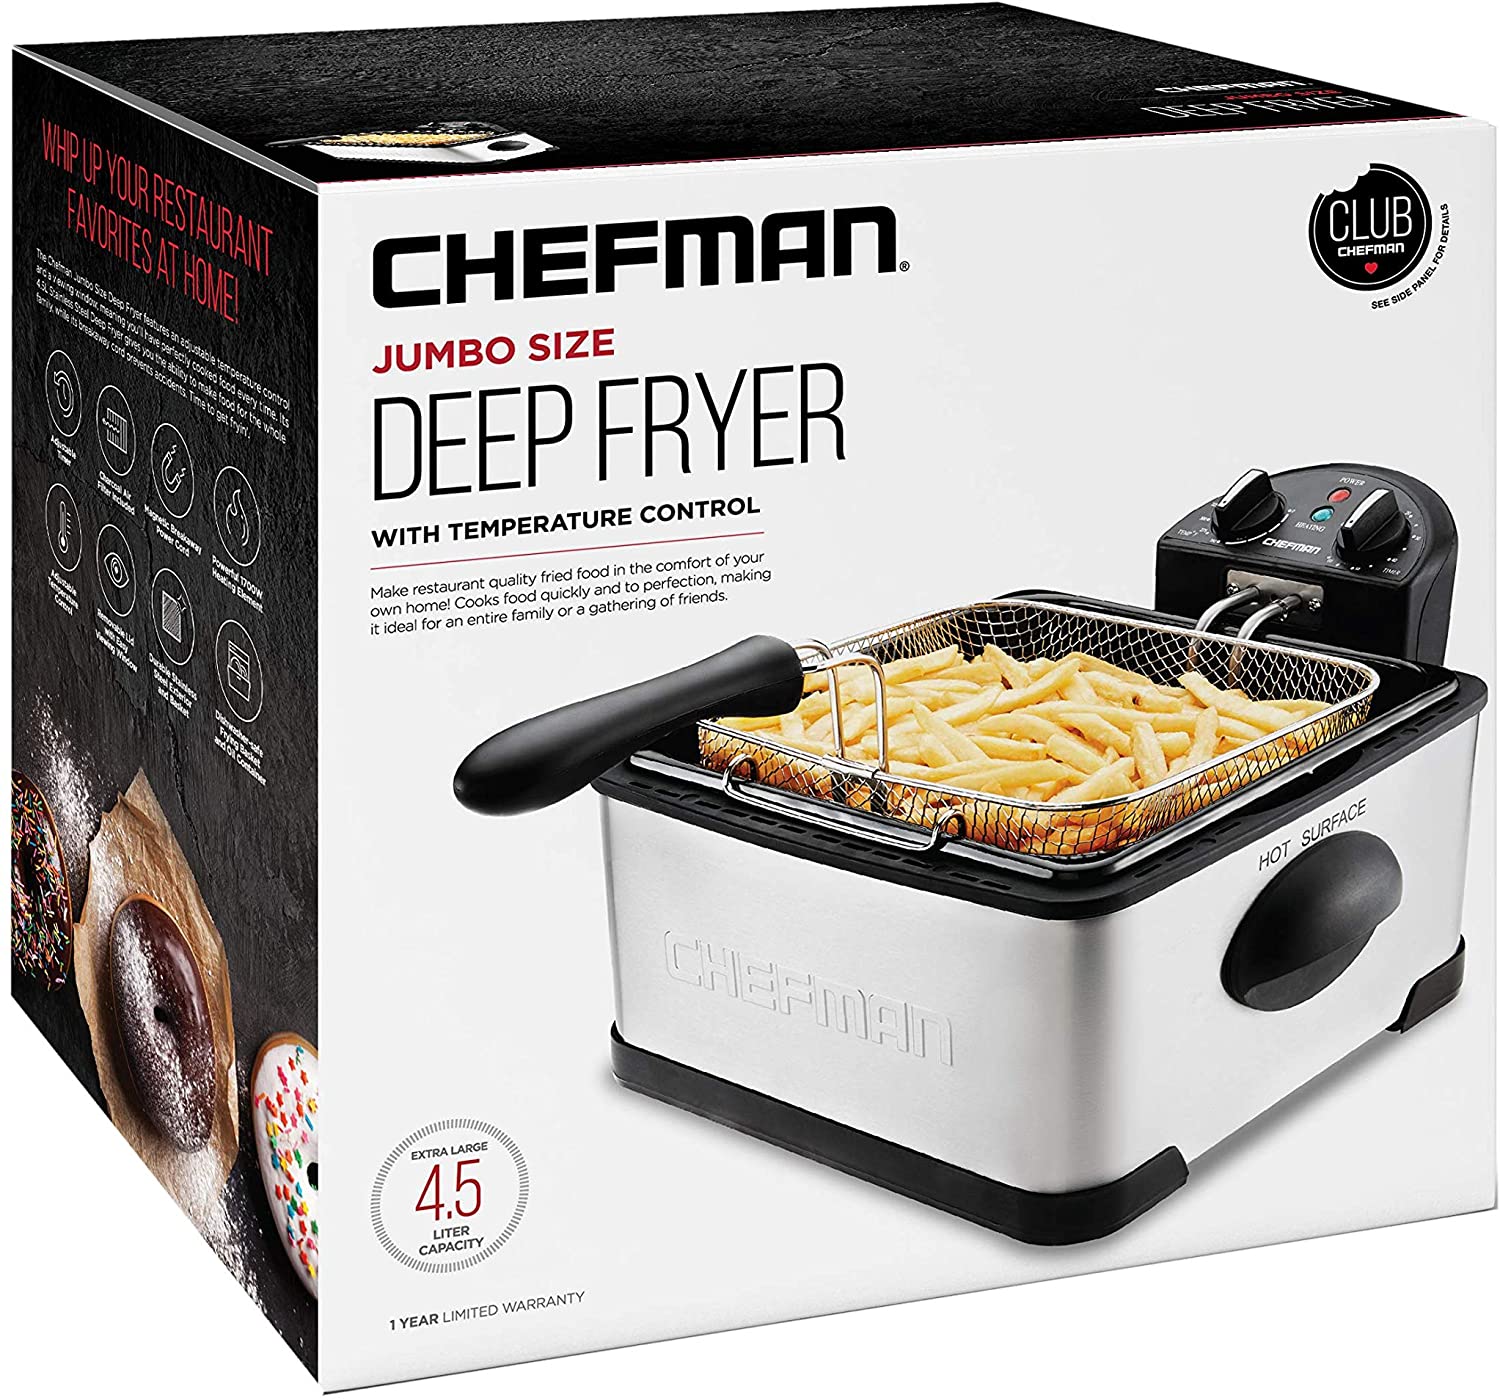 Chefman Deep Fryer with Basket Strainer, 4.5 Liter XL Jumbo Size Adjustable